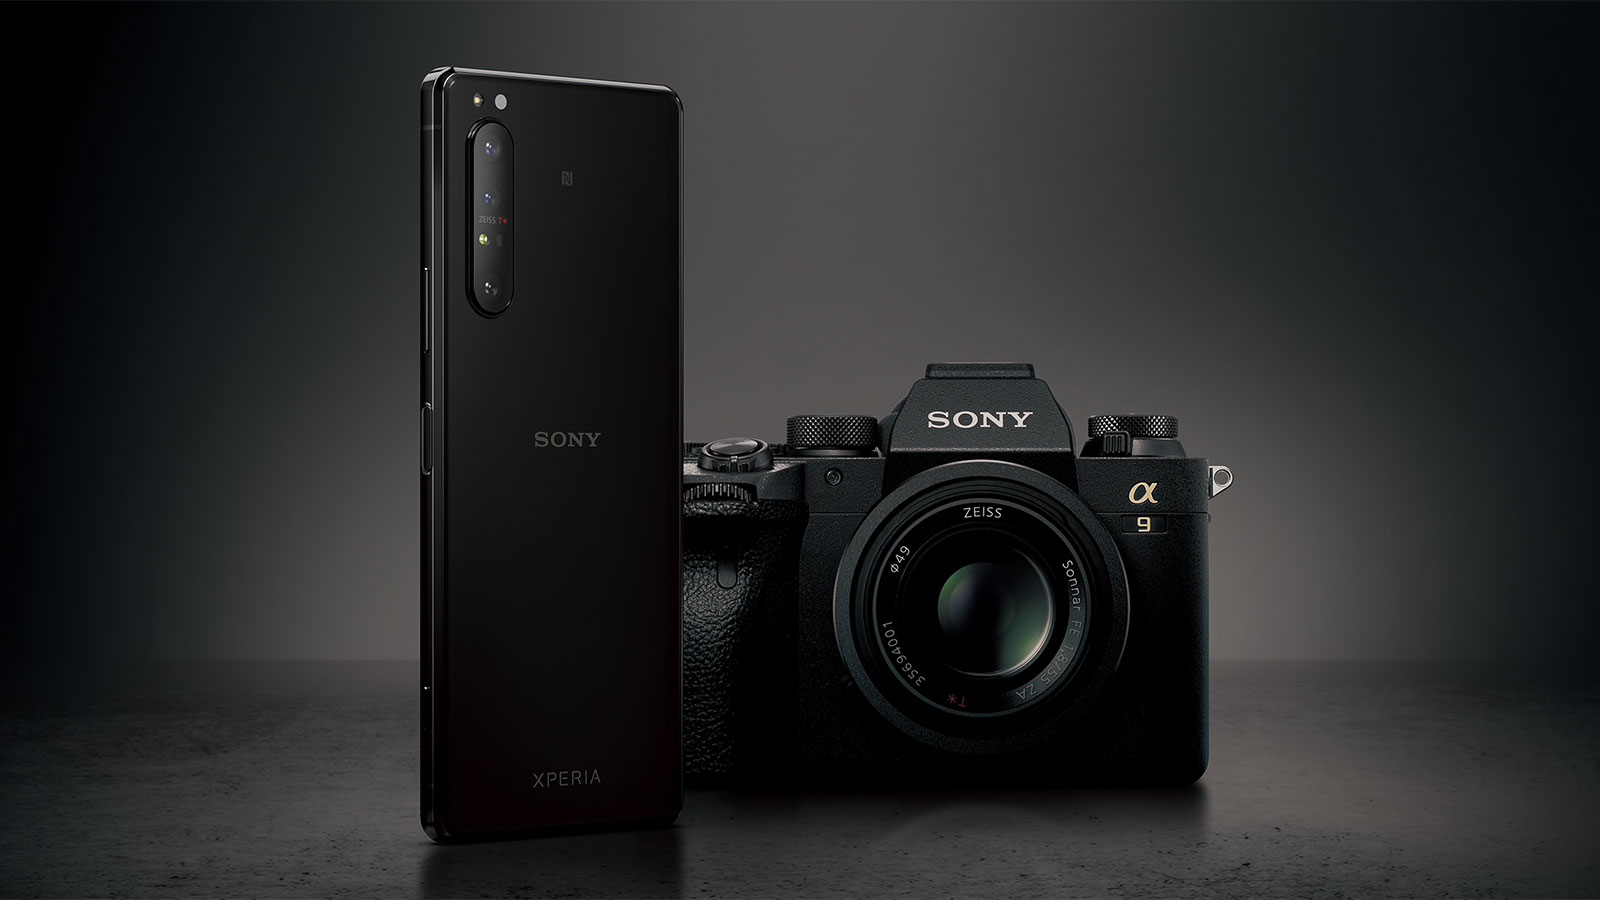 Sony Xperia 1 II Smartphone Alpha a9